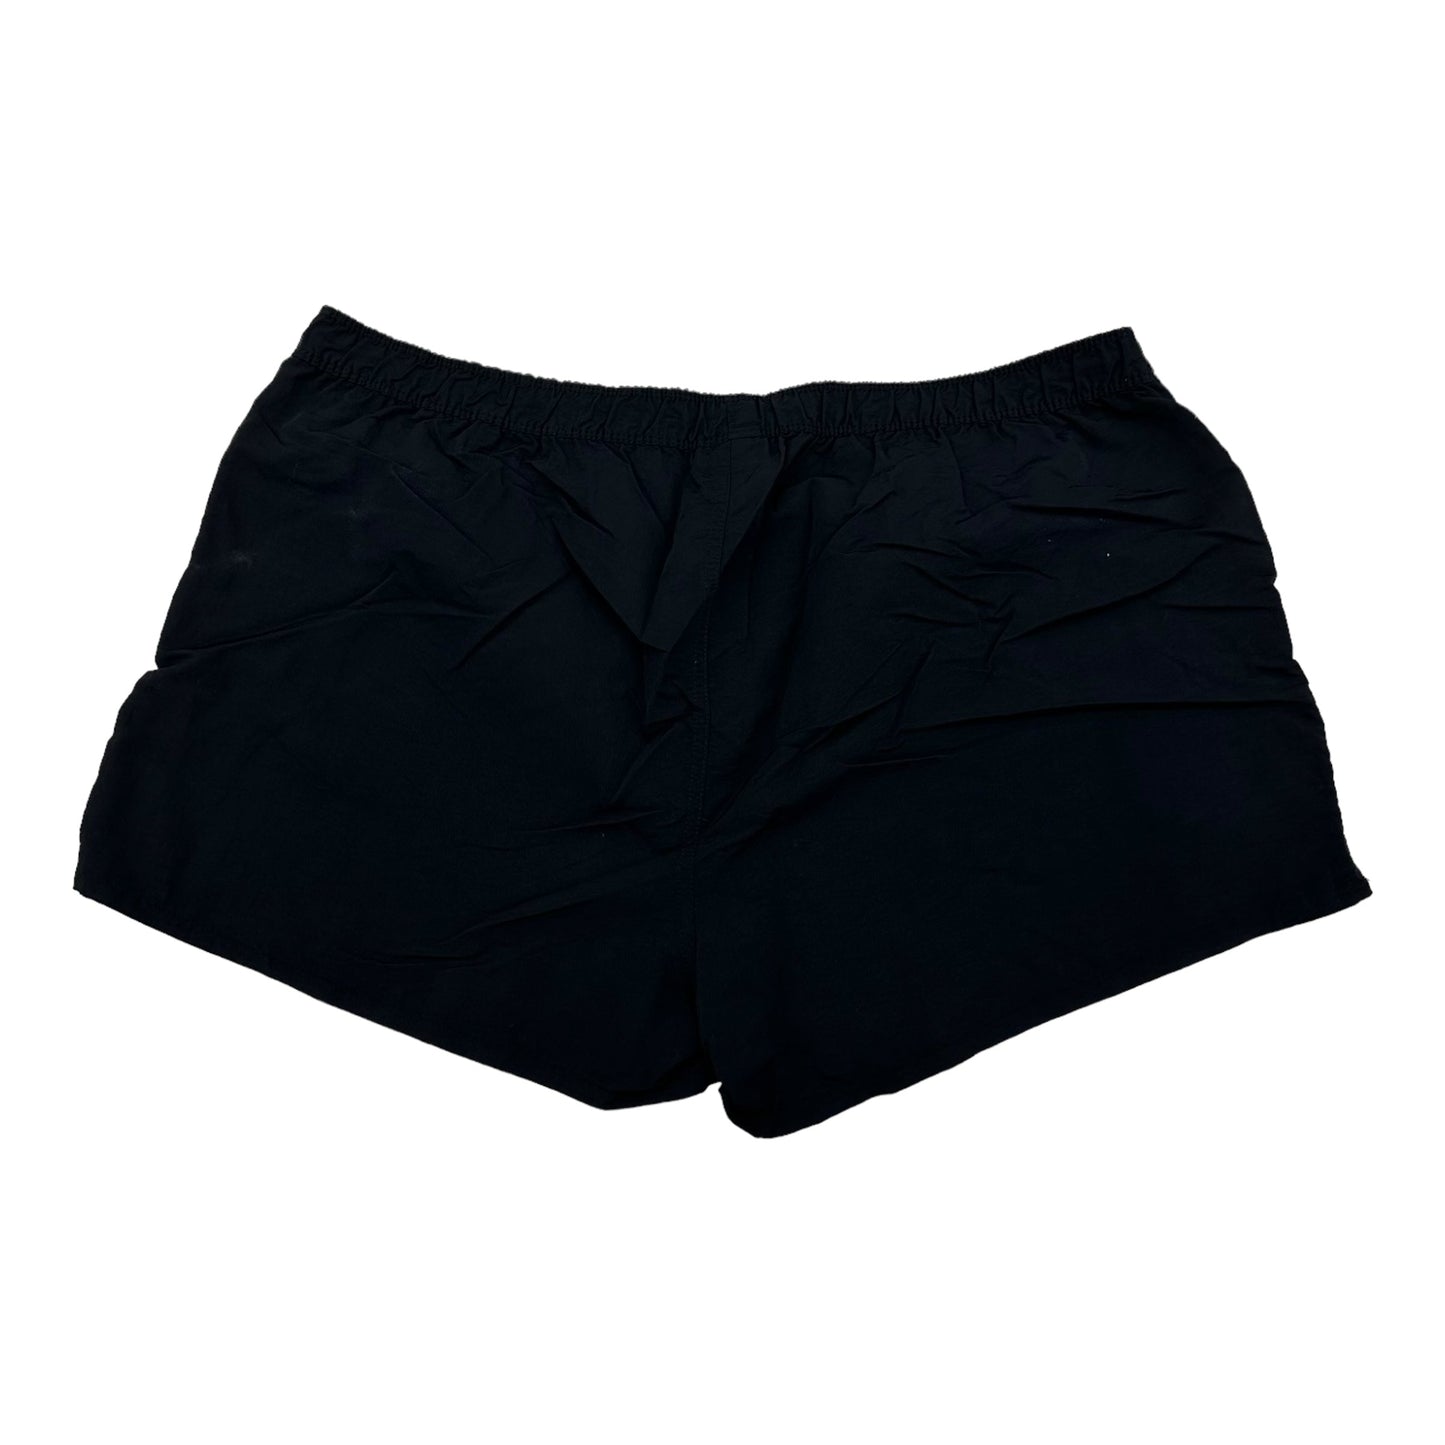 Black Shorts Clothes Mentor, Size 2x